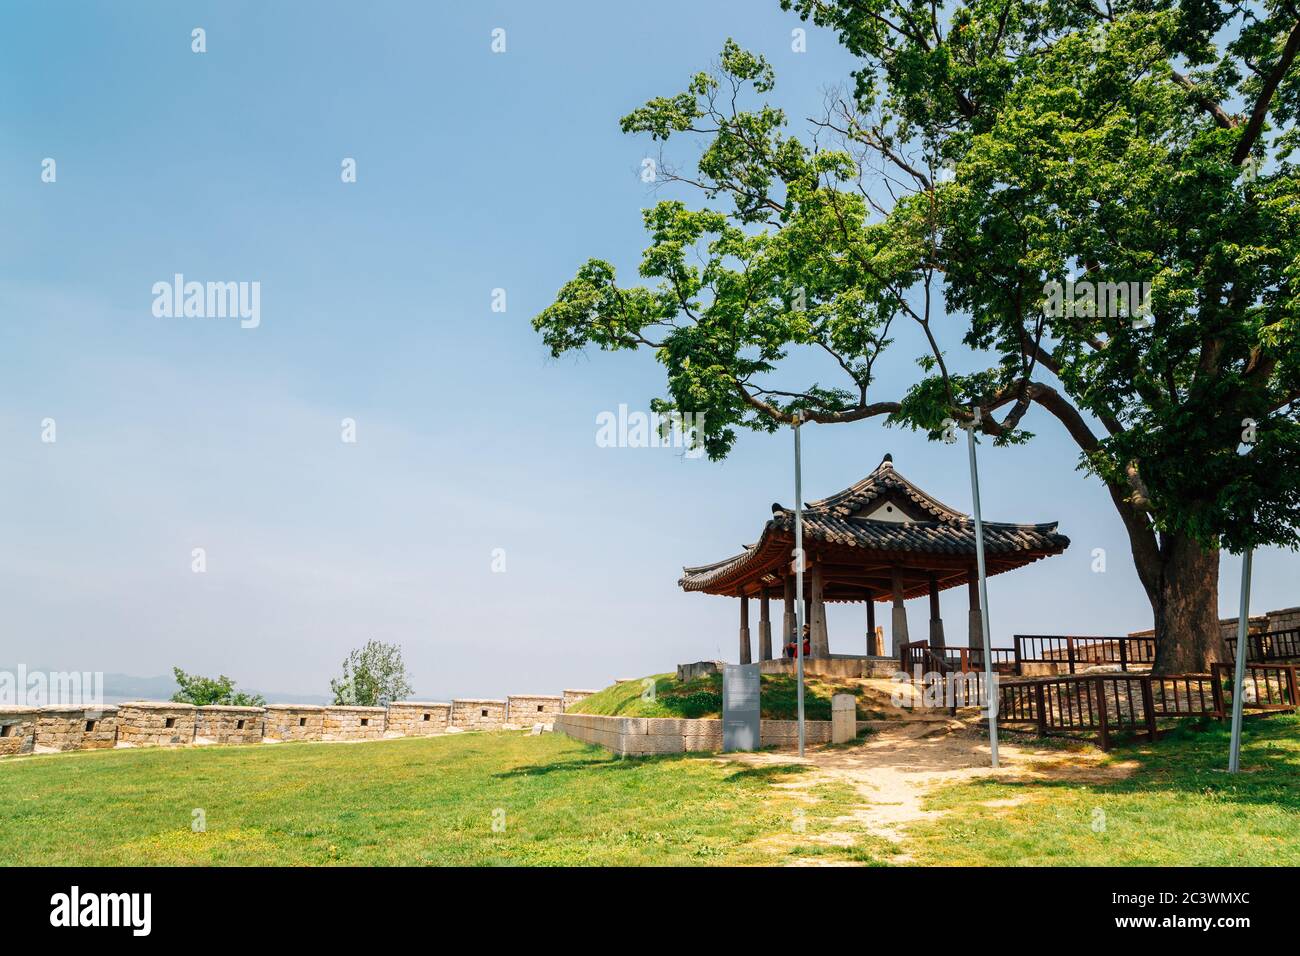 Ganghwa island Yeonmijeong Pavilion in Incheon, Korea Stock Photo